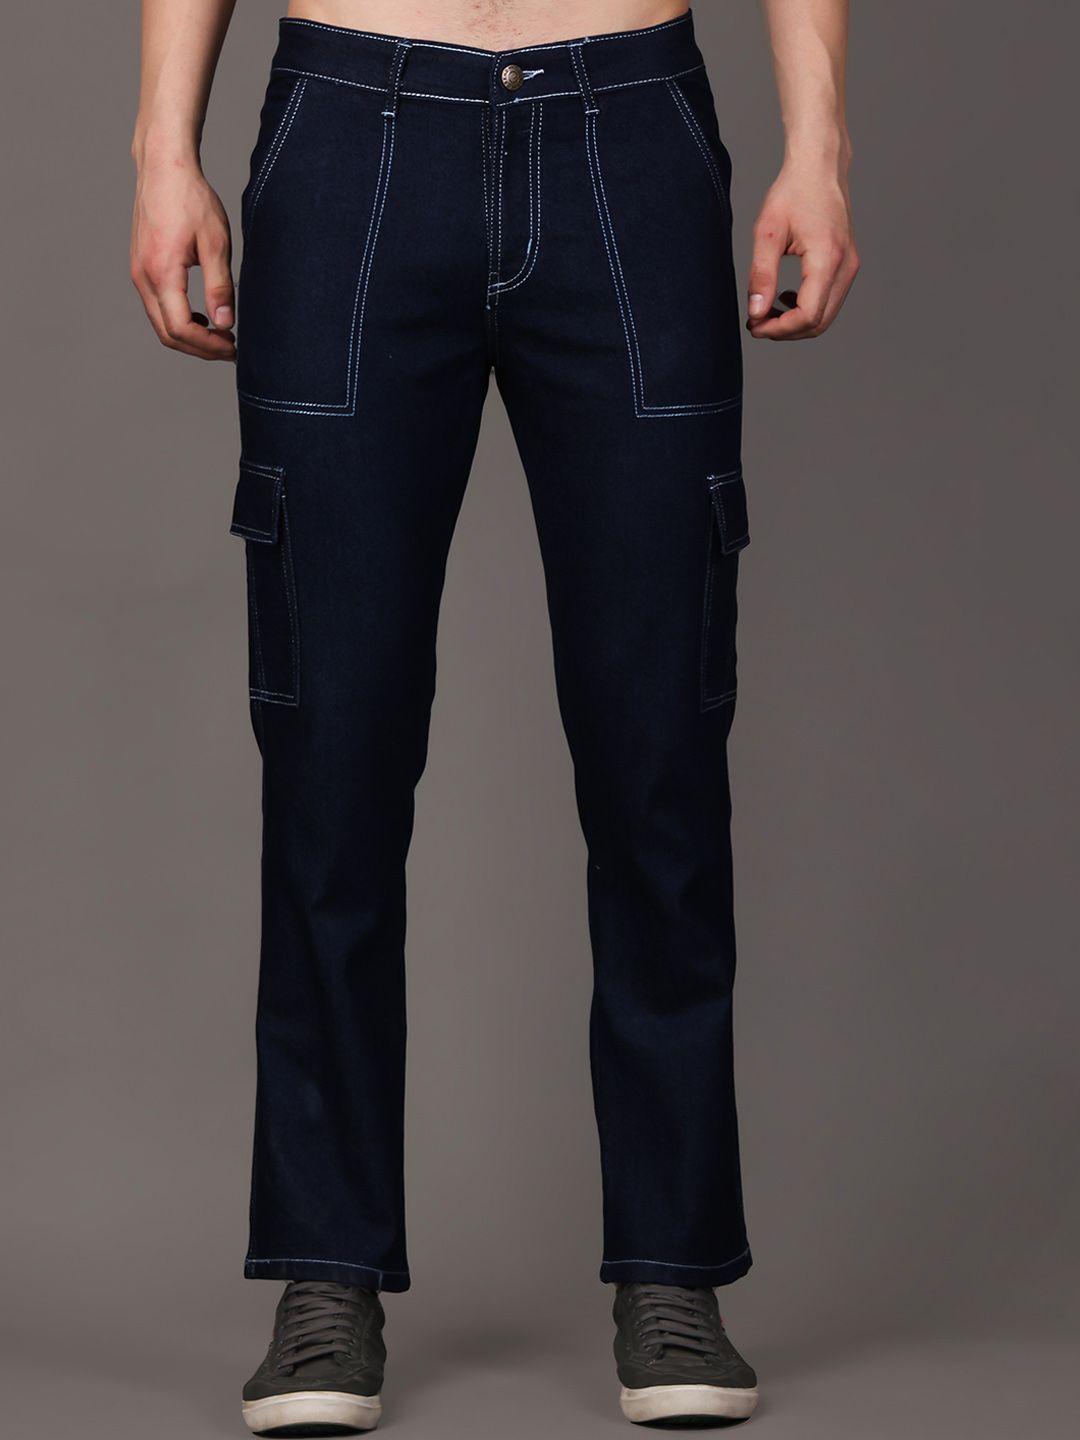 xee men comfort clean look mid-rise cotton cargo jeans